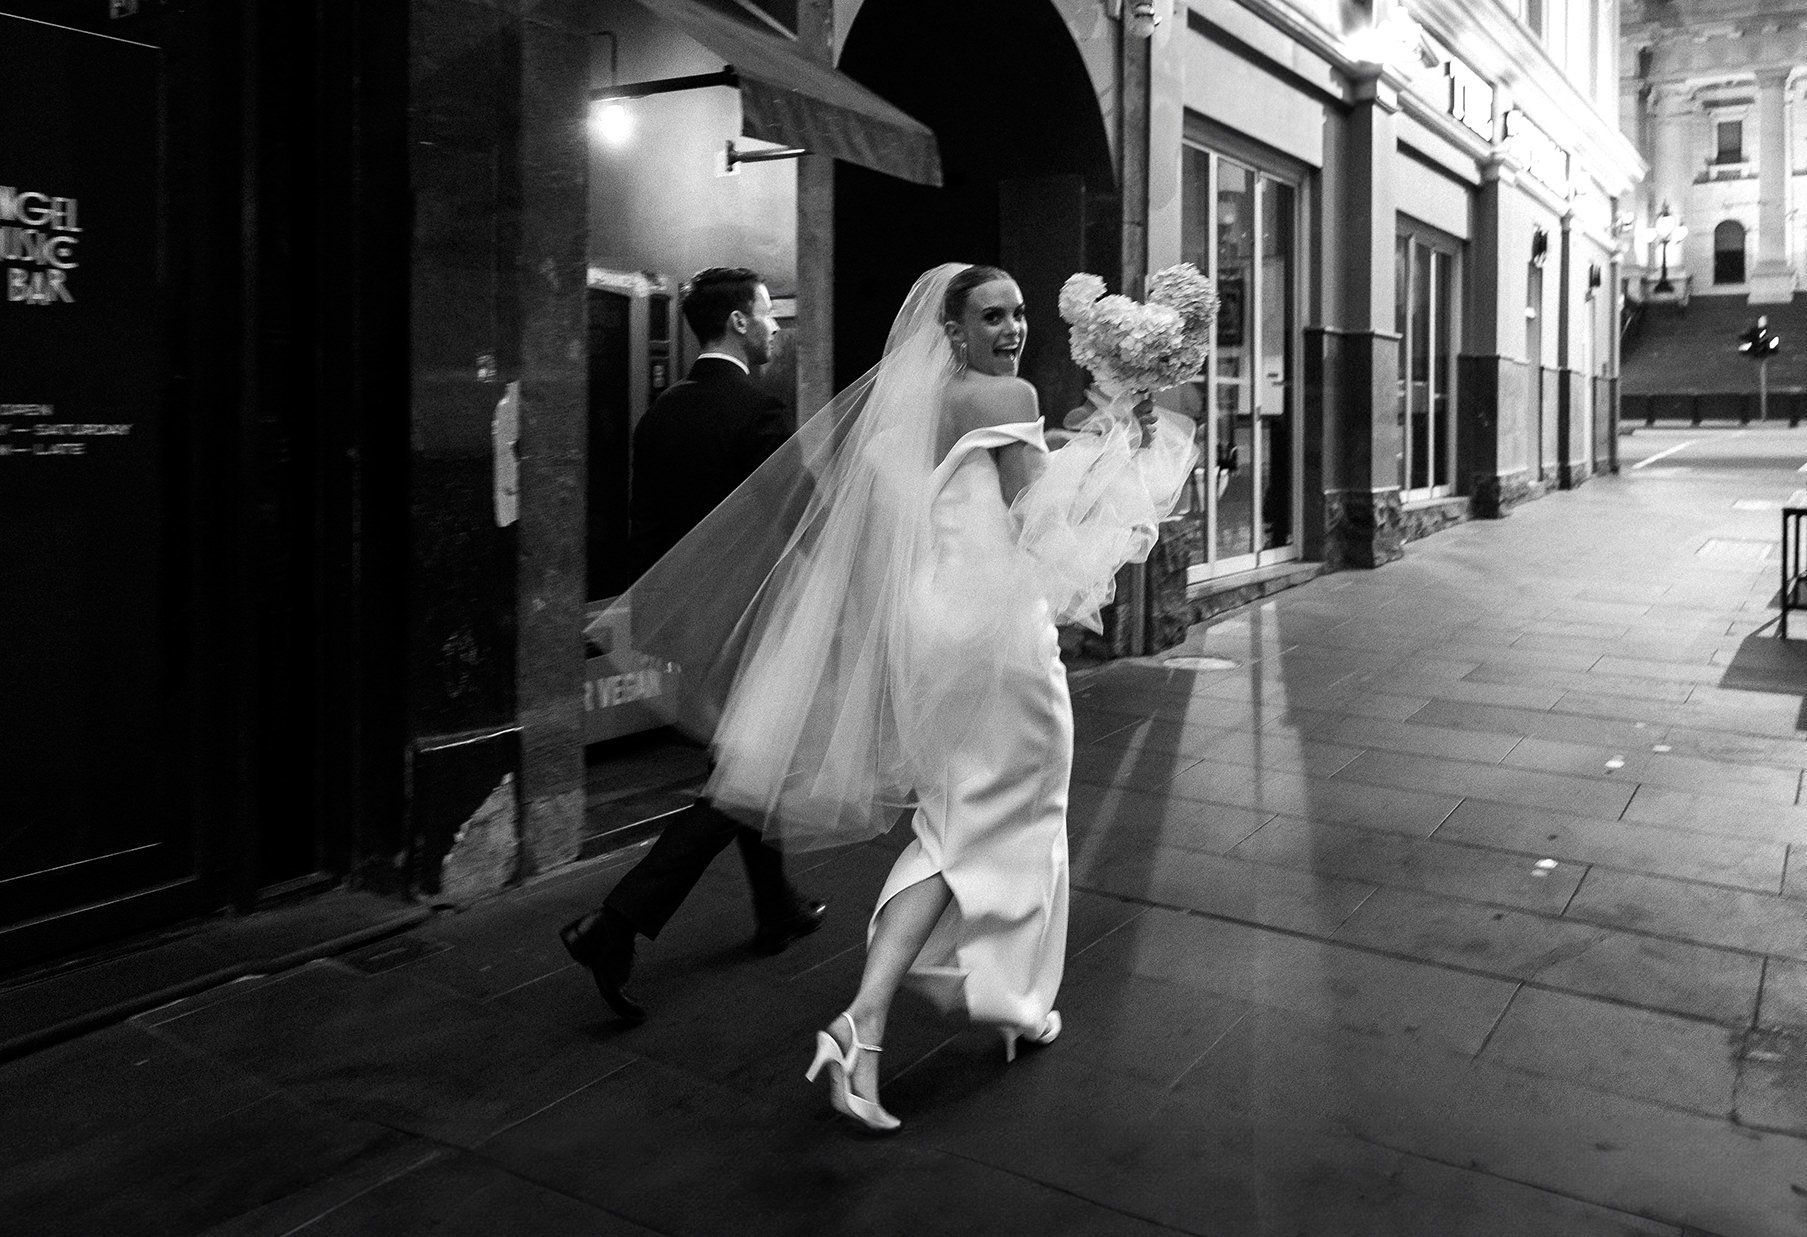 Wedding Photography Melbourne